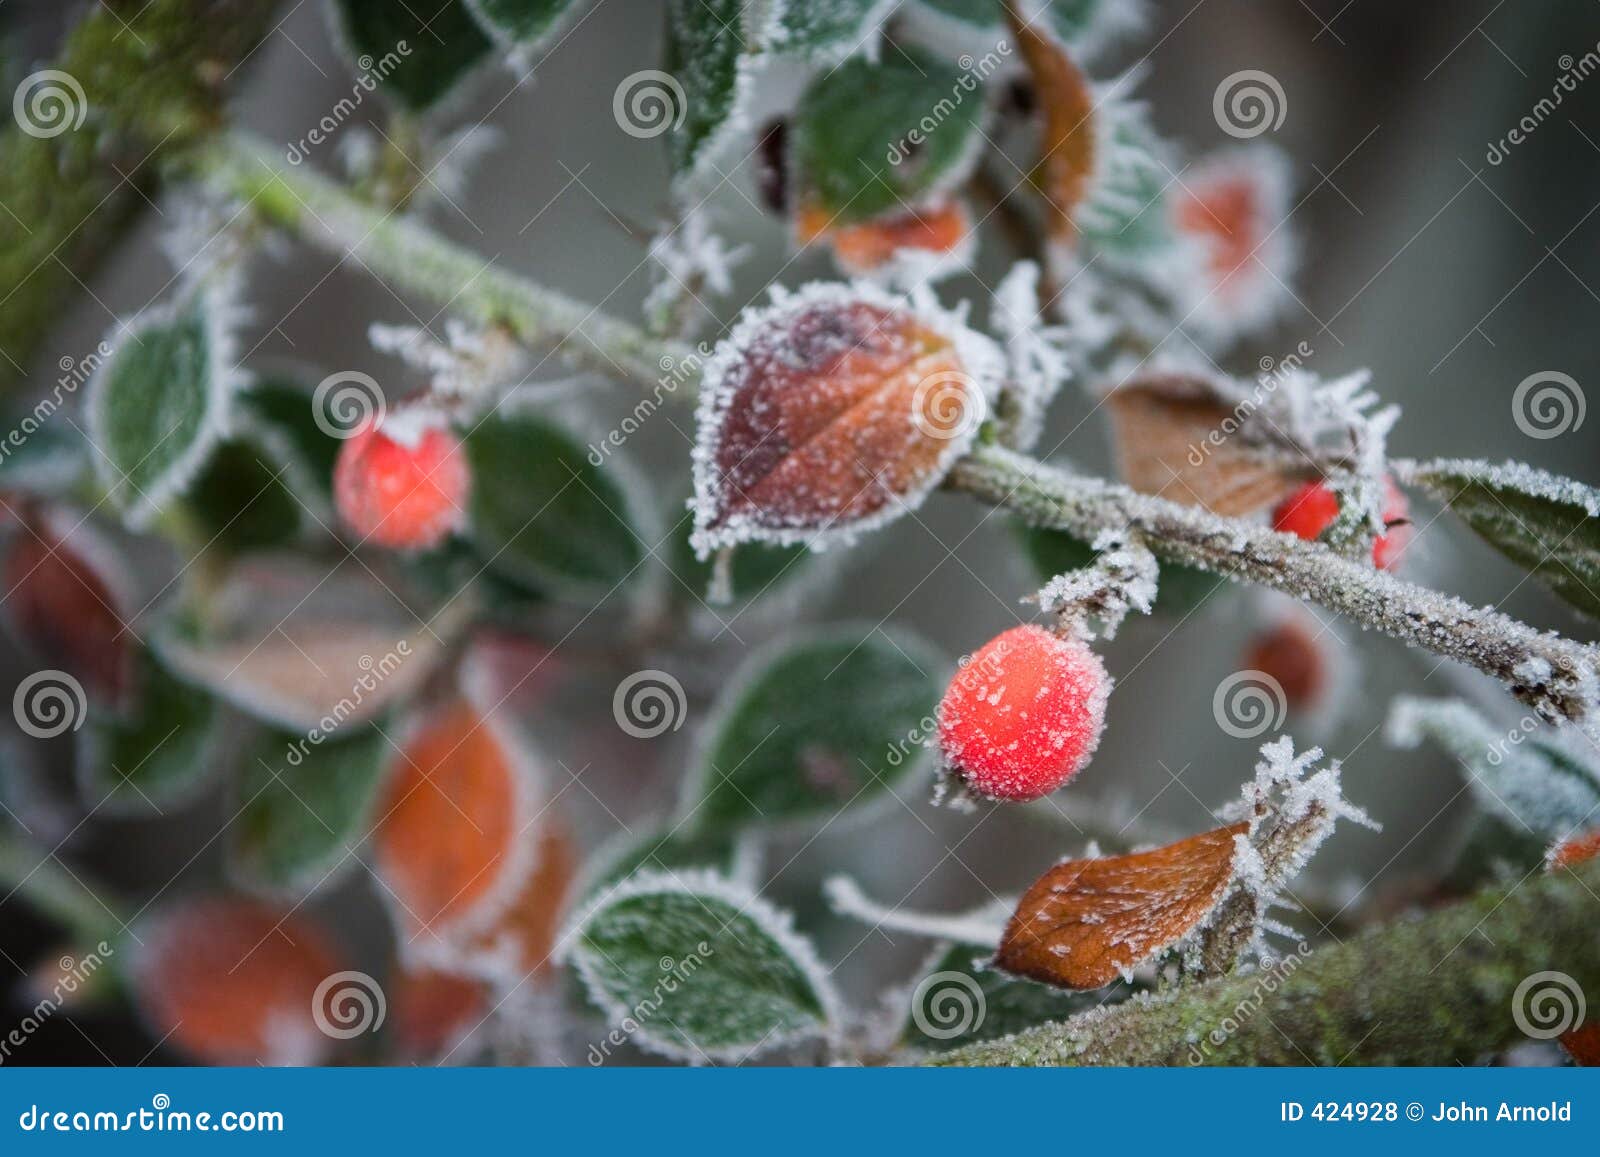 frosty garden 3